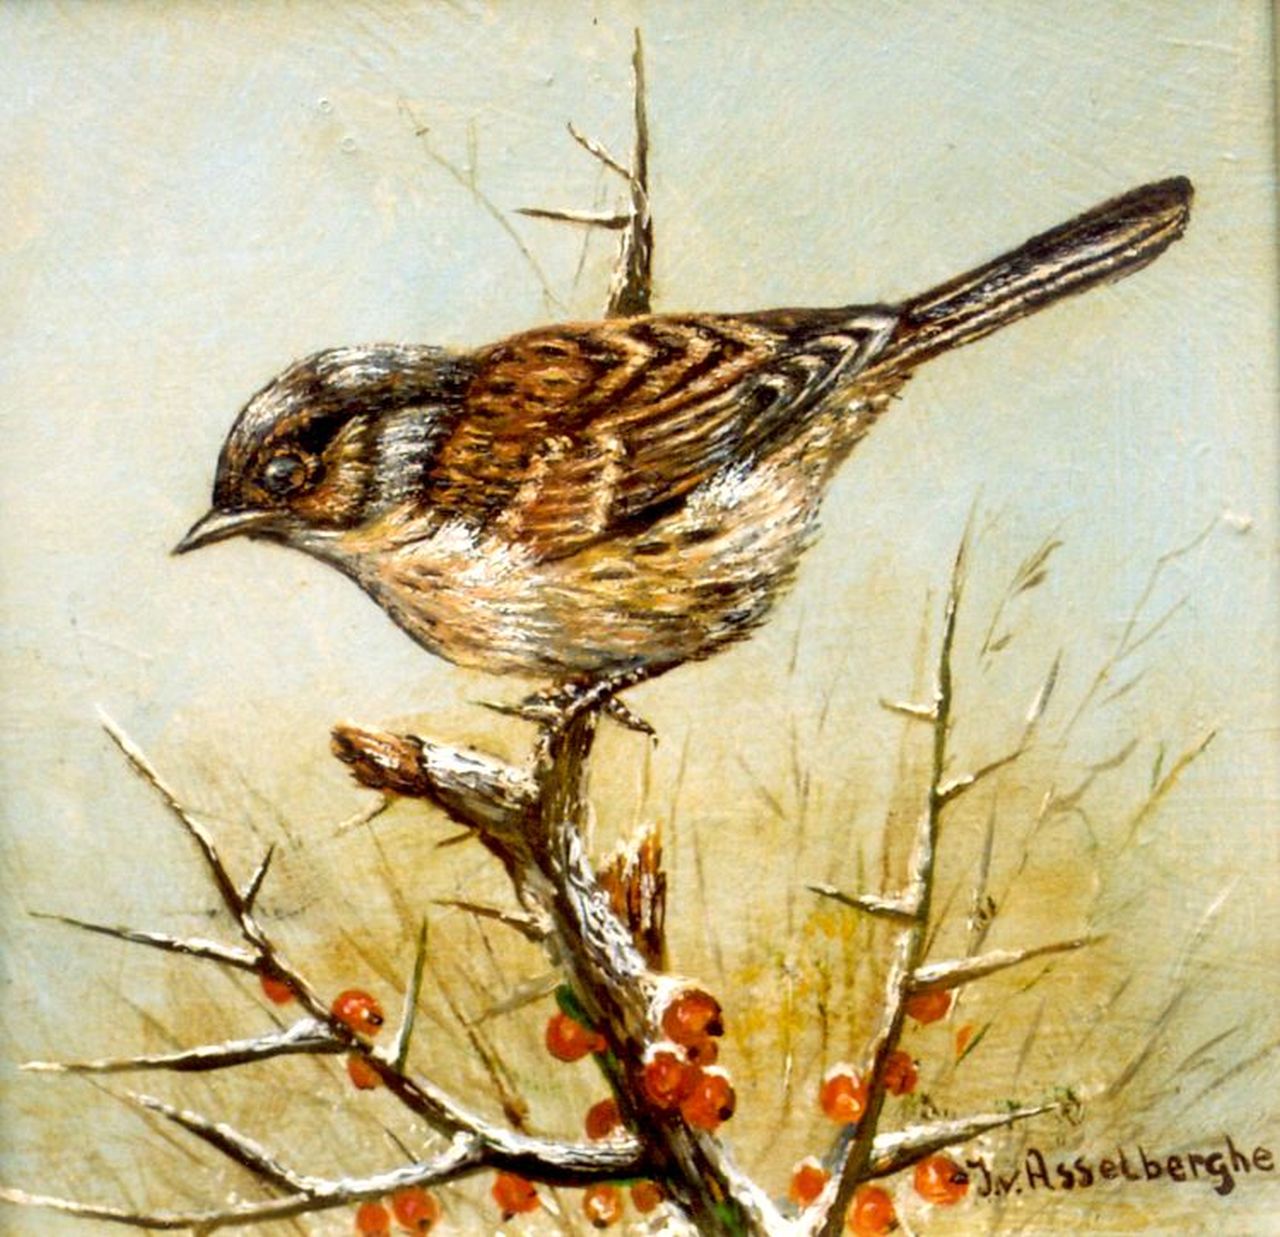 Asselberghe J. van | van Asselberghe, A hedge sparrow, Öl auf Holz 13,0 x 13,0 cm, signed l.r.